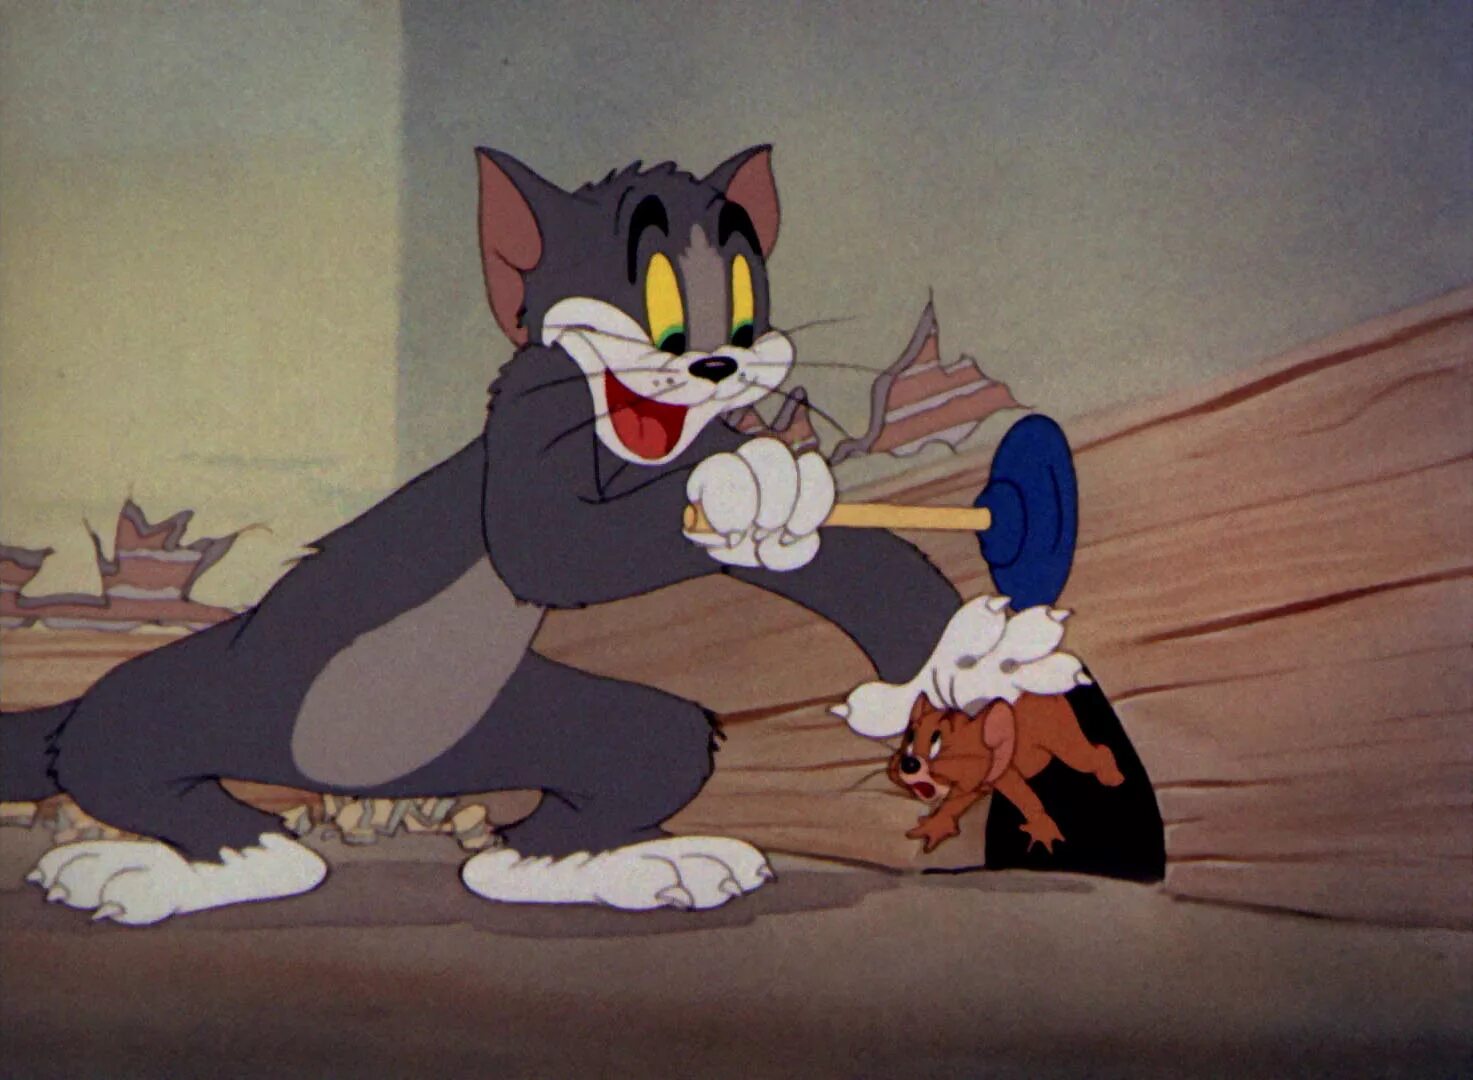 Том из тома и джерри. Tom and Jerry. Том и Джерри 1972. Том и Джерри 1953. Том и Джерри 1960 года.